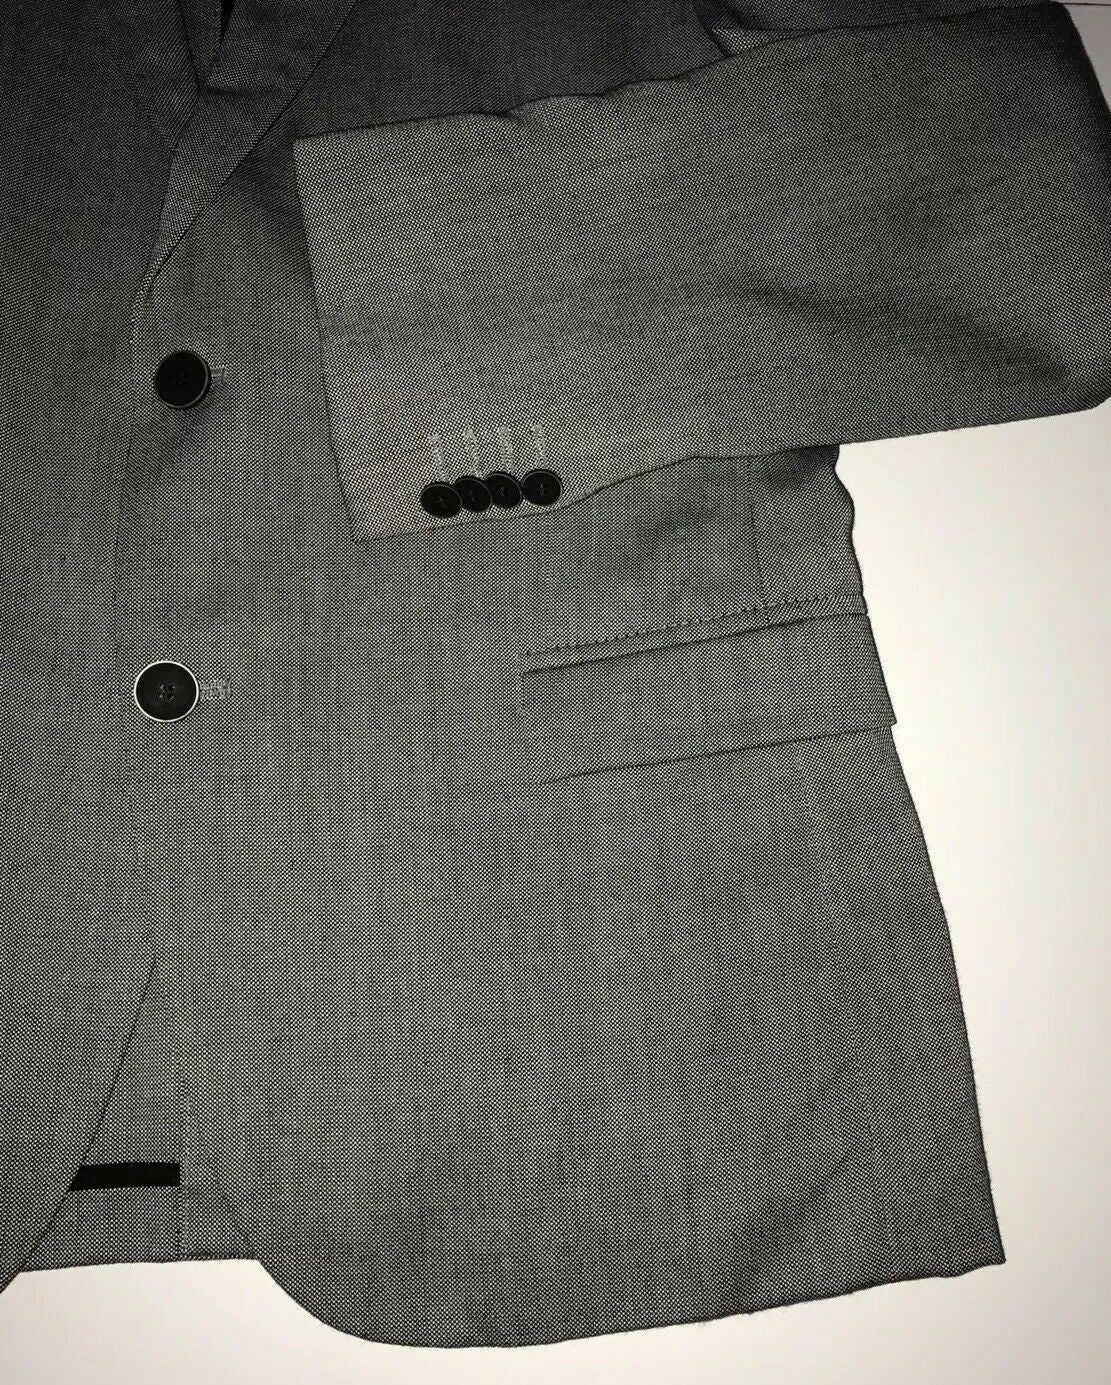 NWT $445 Boss Hugo Boss Amandos Sport Coat Jacket Charcoal 40R US (50R Eu)